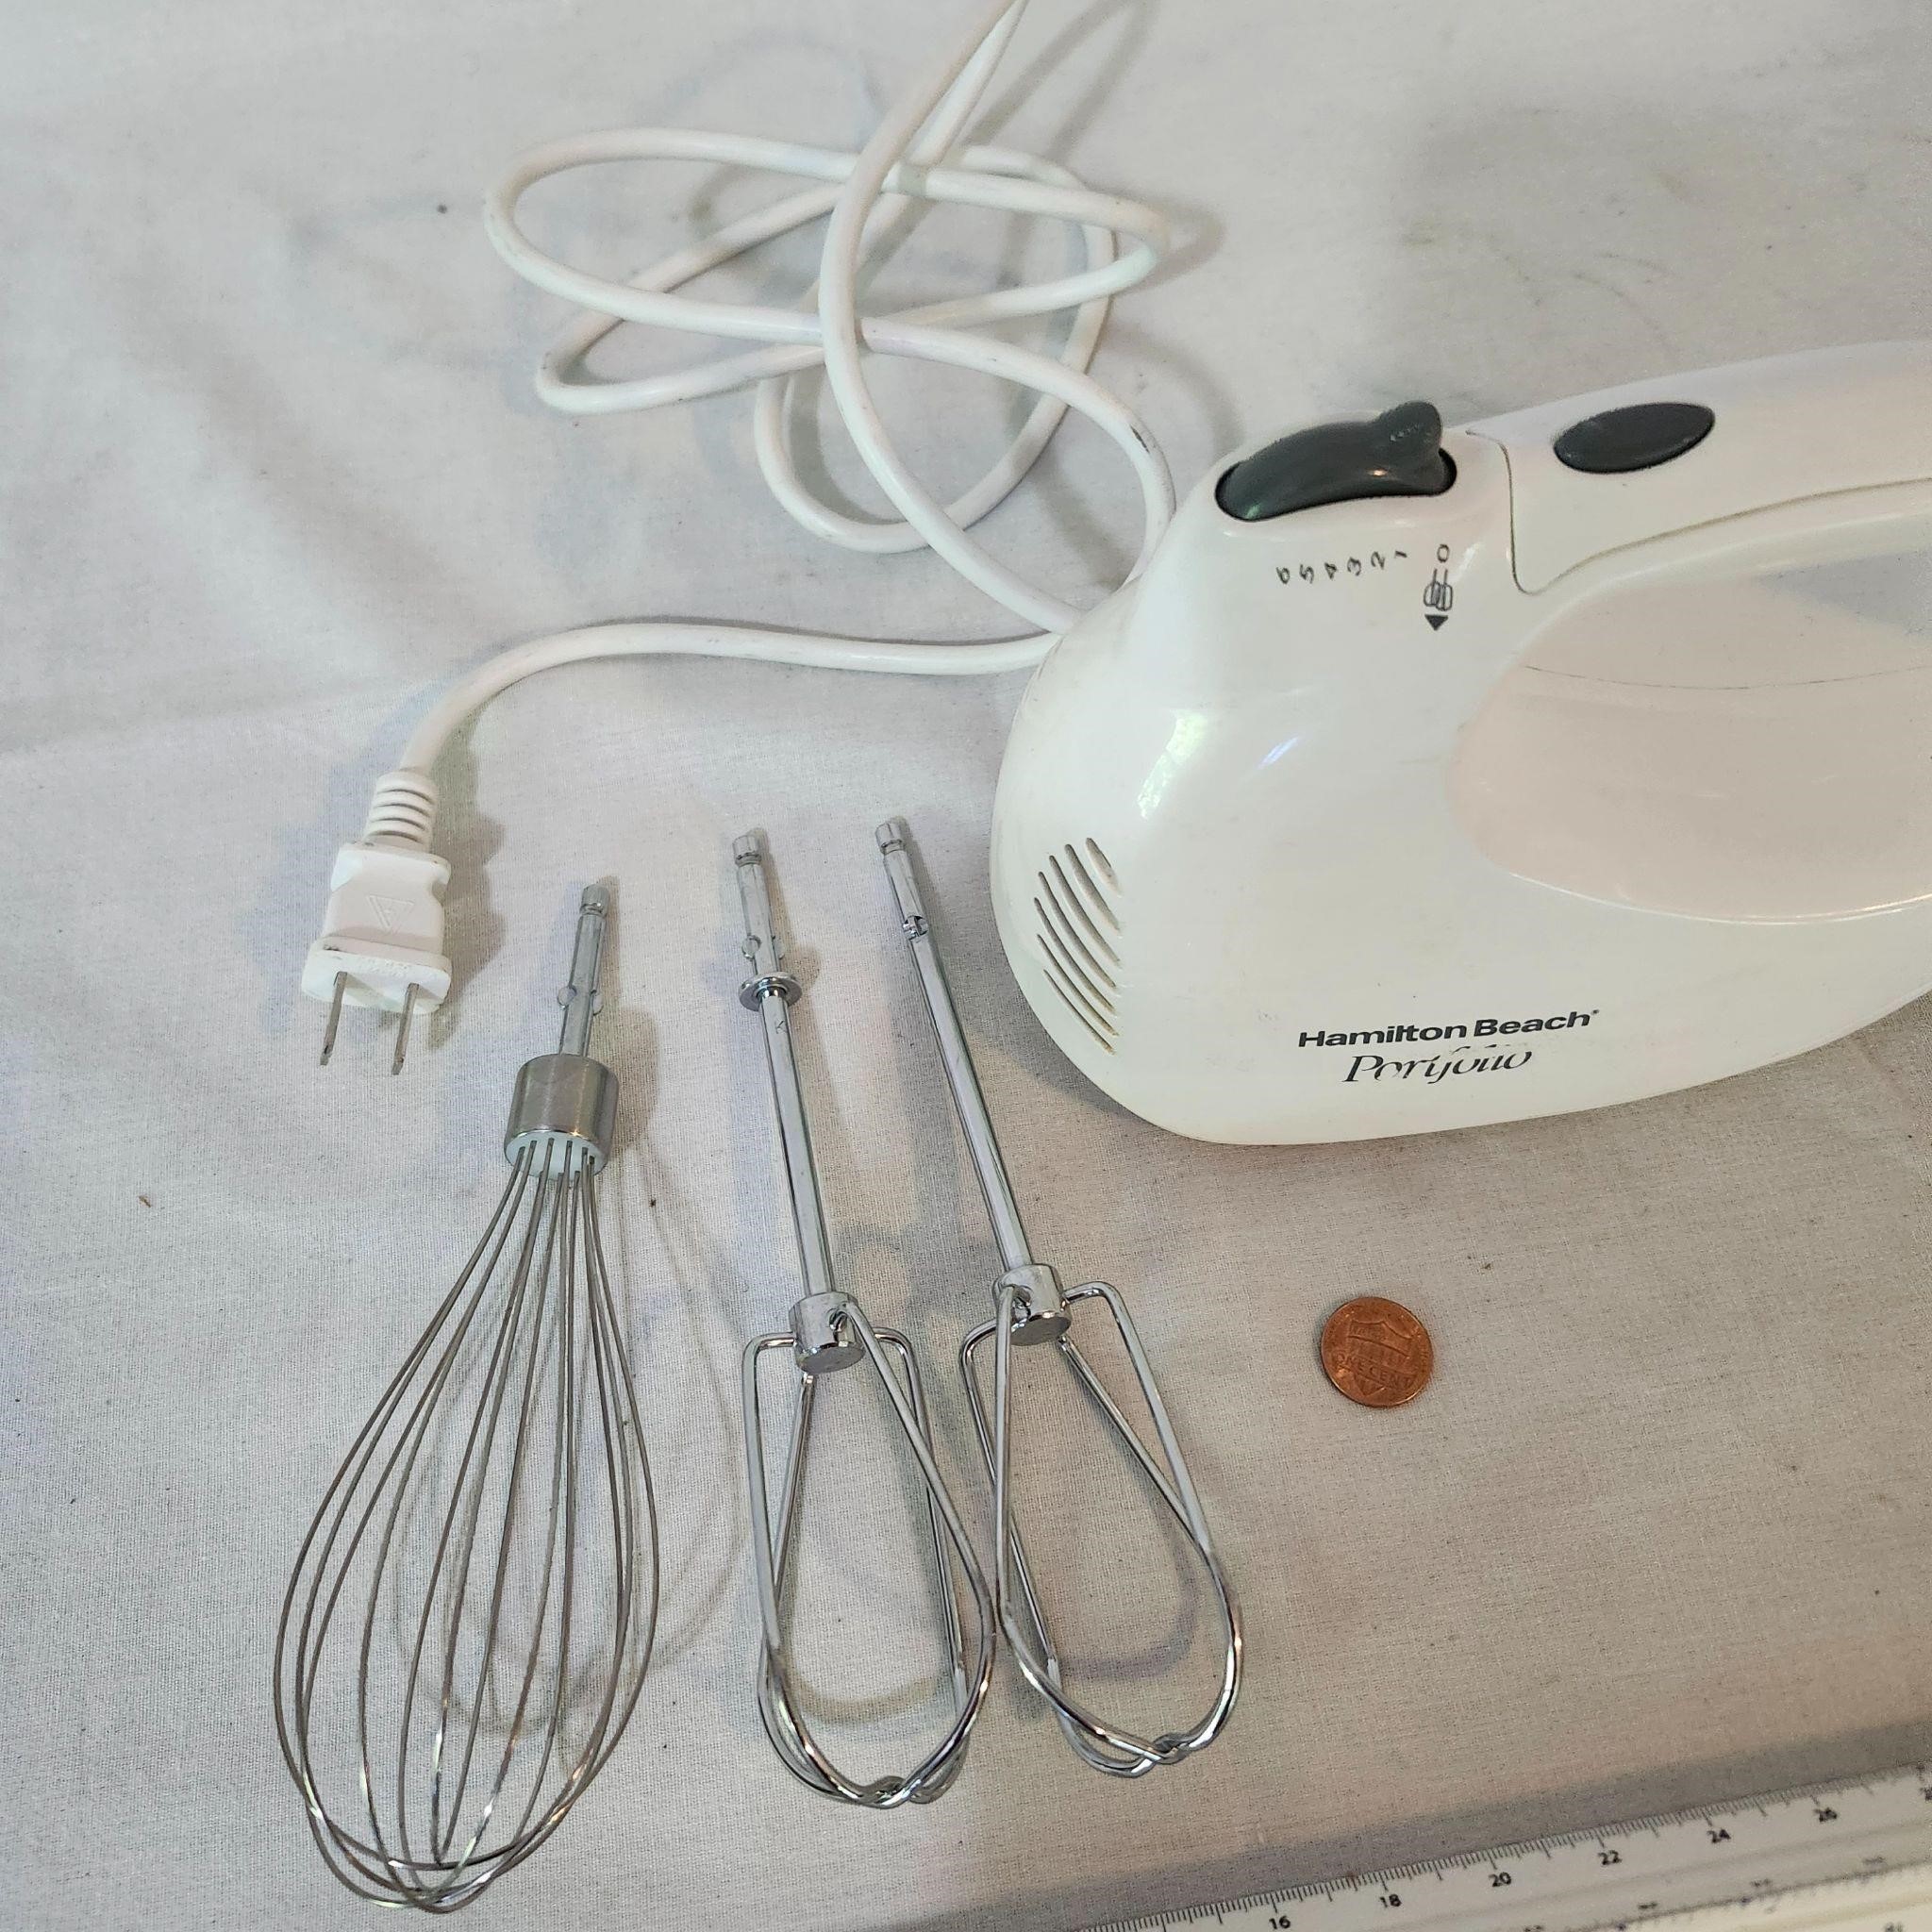 Hamilton Beach Portfolio electric hand mixer